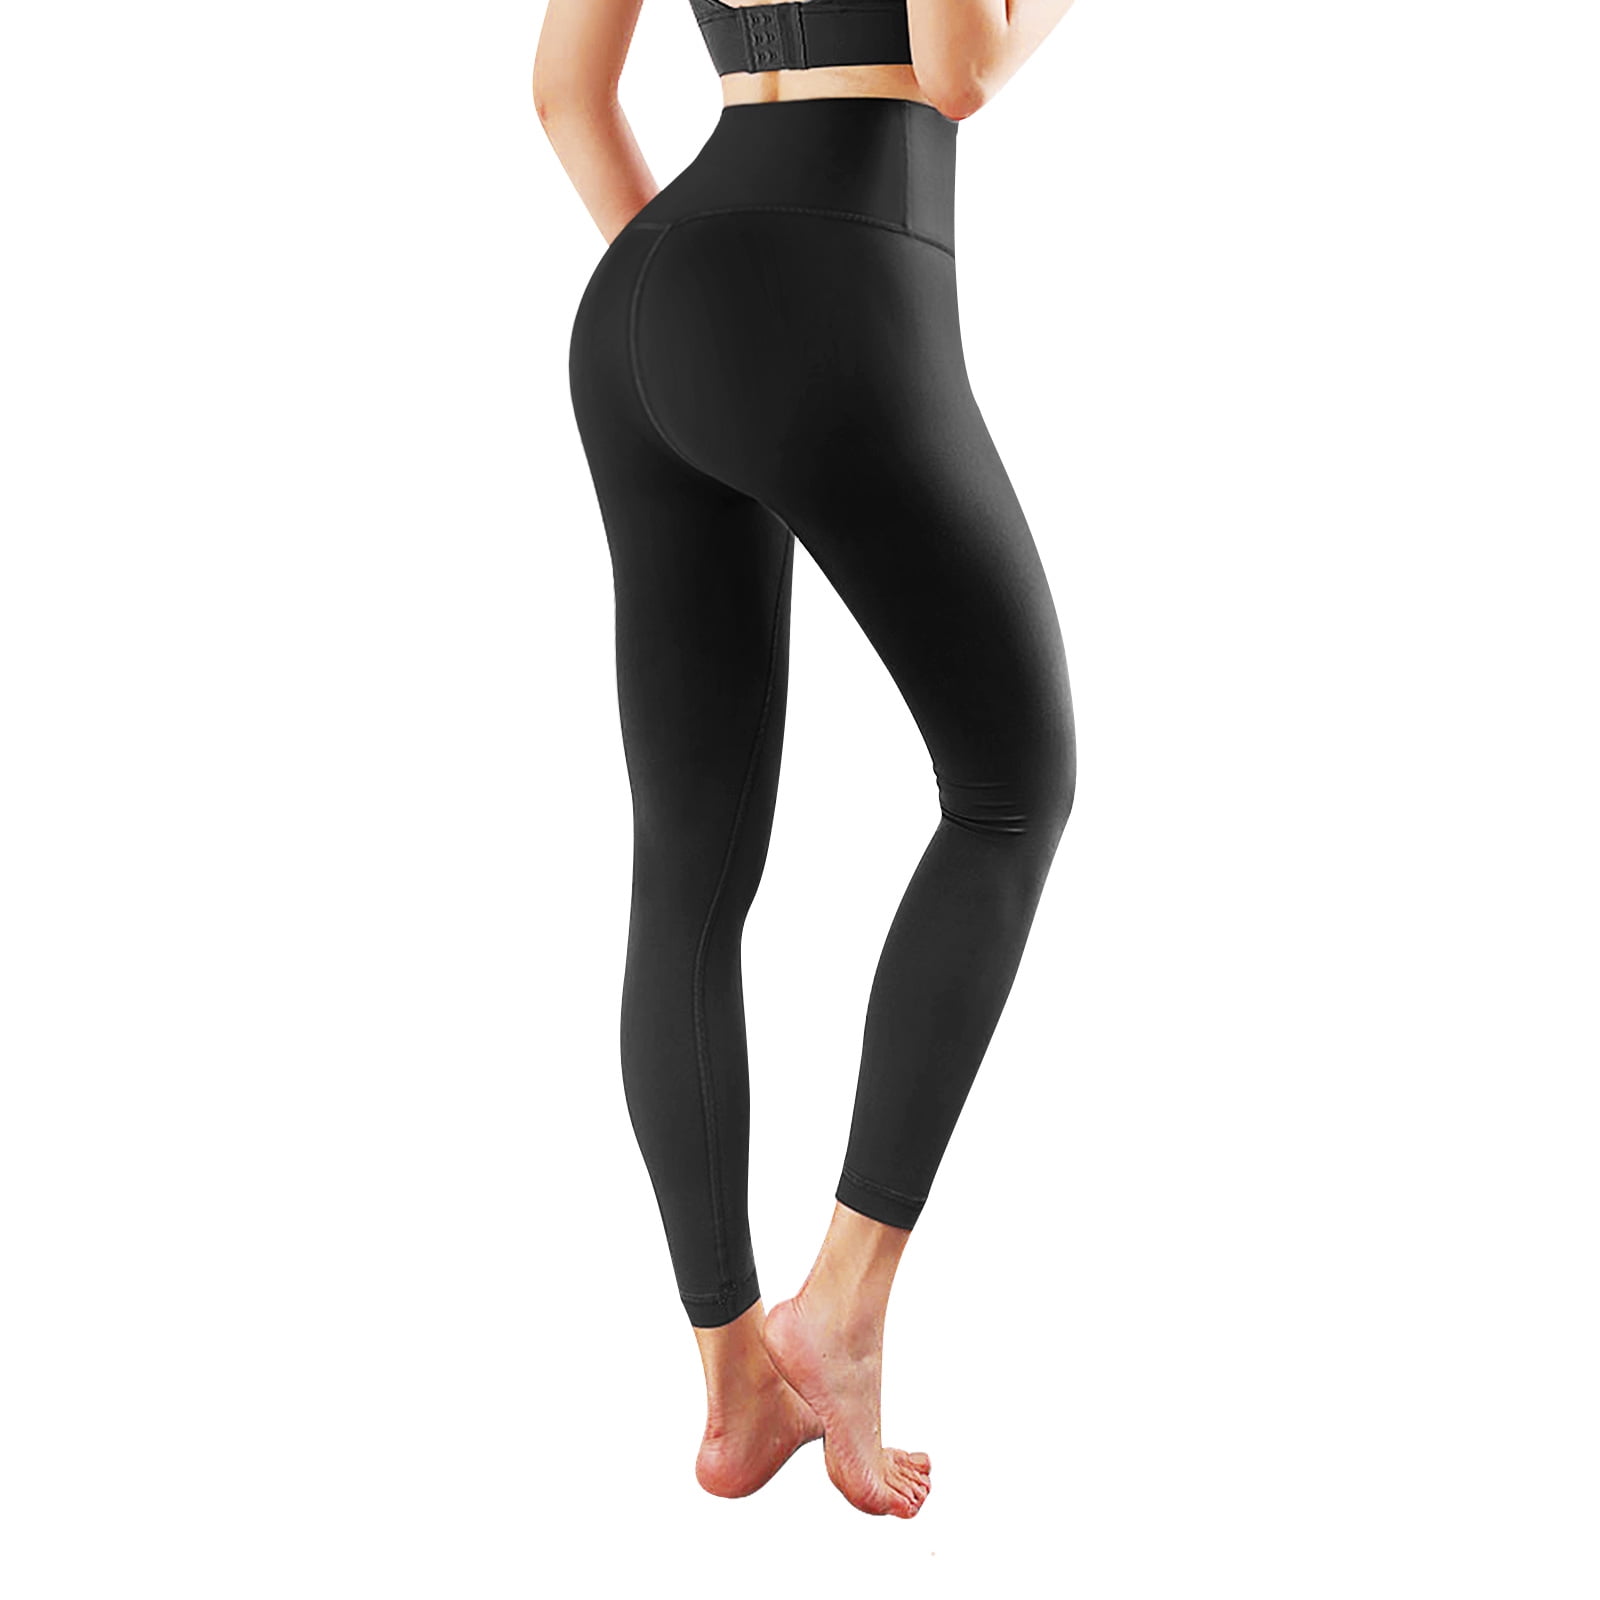 NOT American Flag Peterbilt Womens 3D Digital Print High Wait Leggings Yoga Workout Pants 